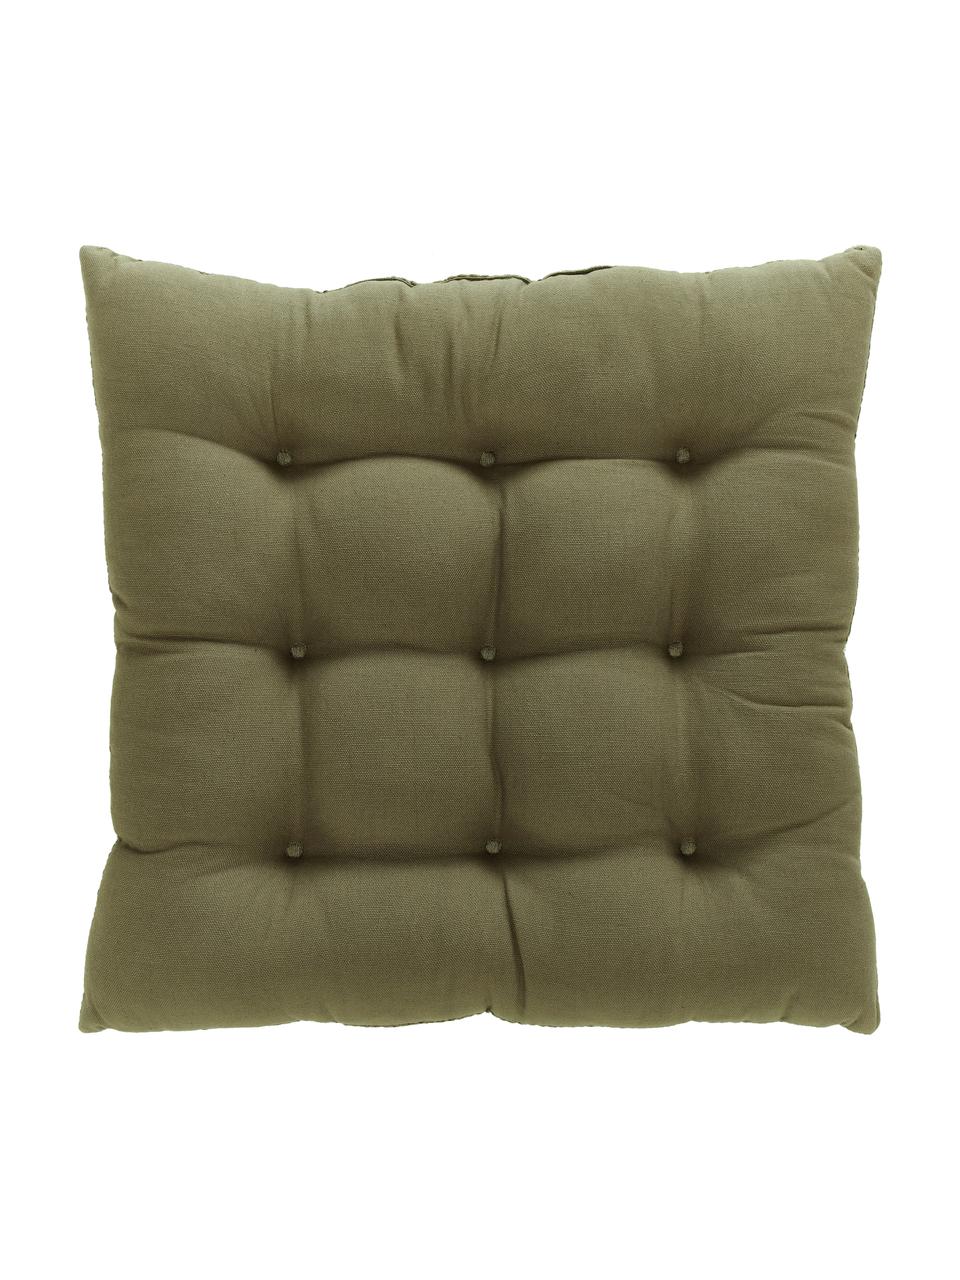 Cuscino sedia in cotone verde Sasha, Rivestimento: 100% cotone, Verde oliva, Larg. 40 x Lung. 40 cm